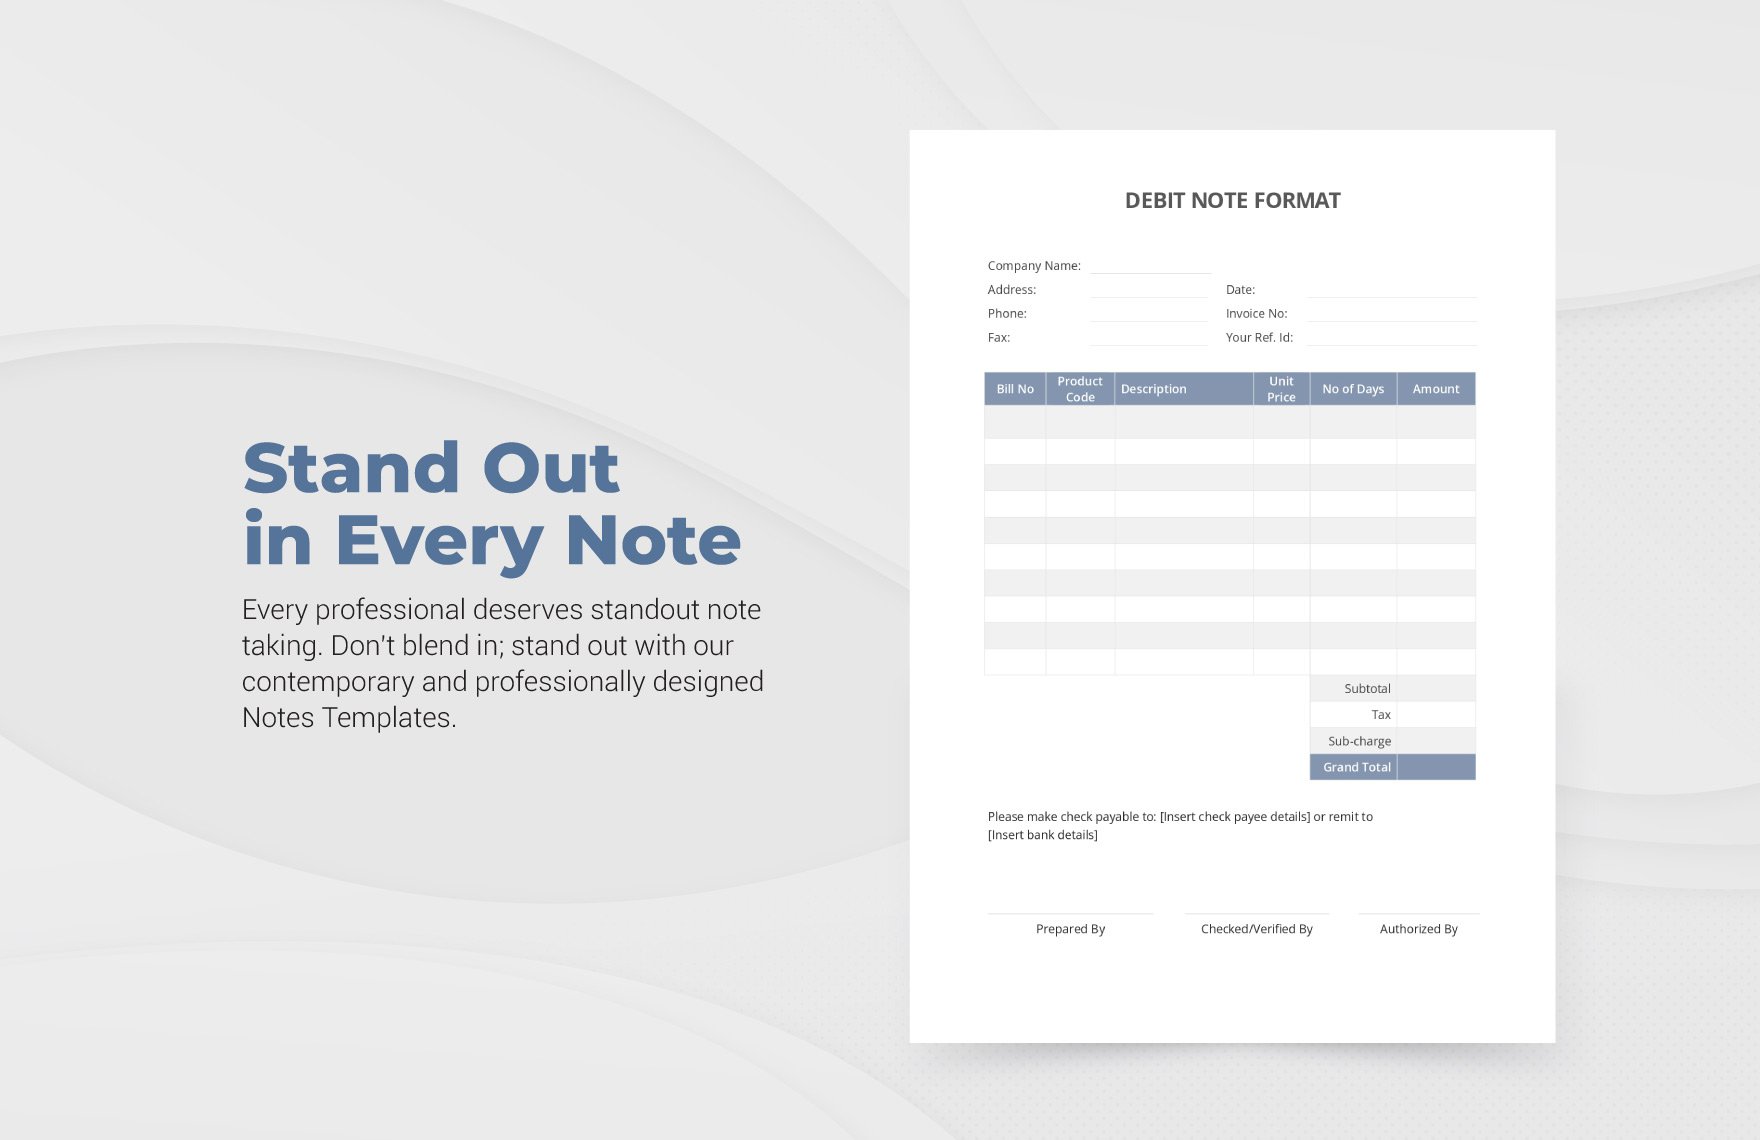 Debit Note Format Template